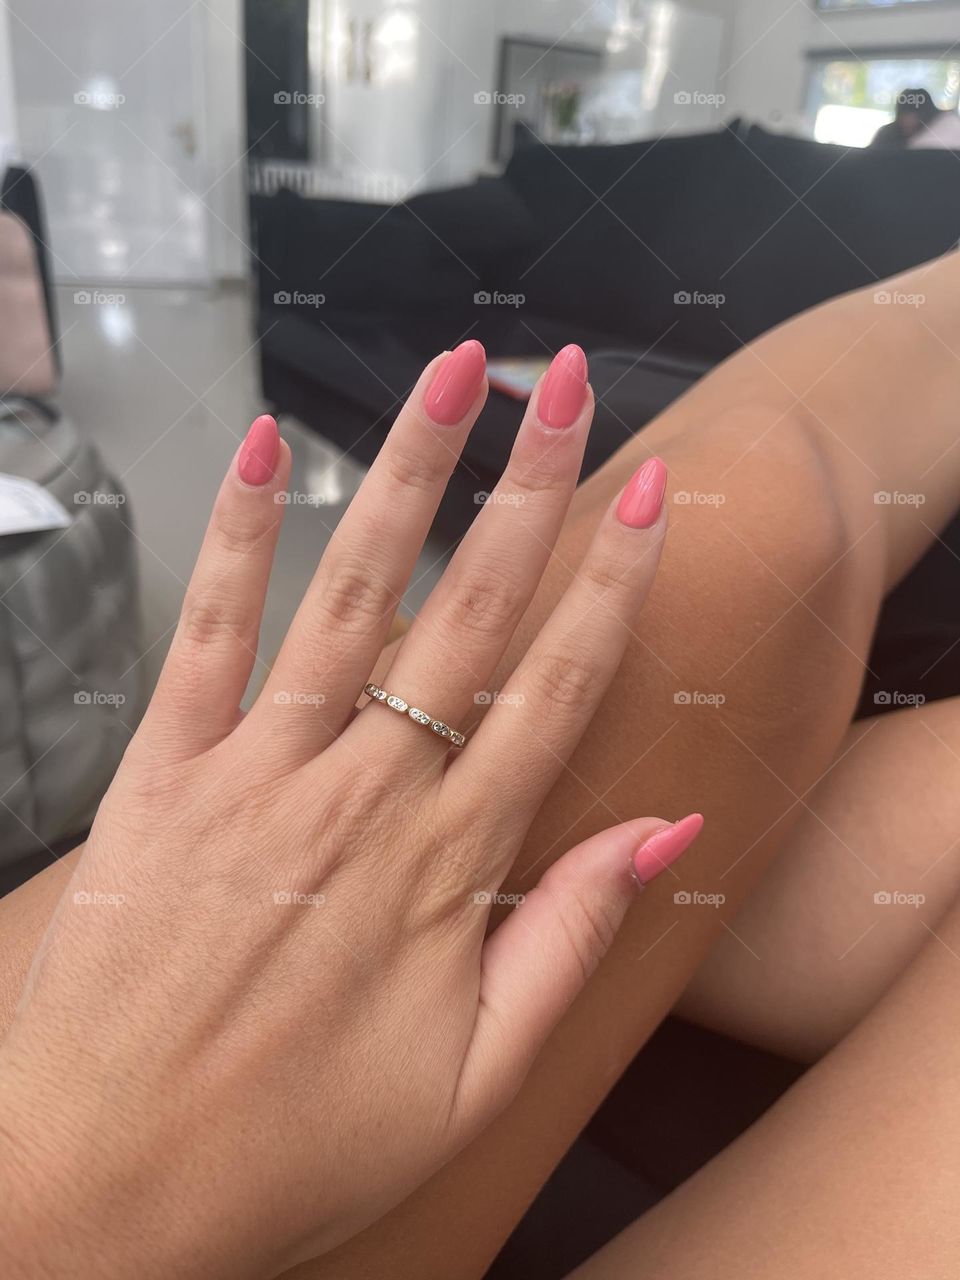 Hot pink manicure 💕